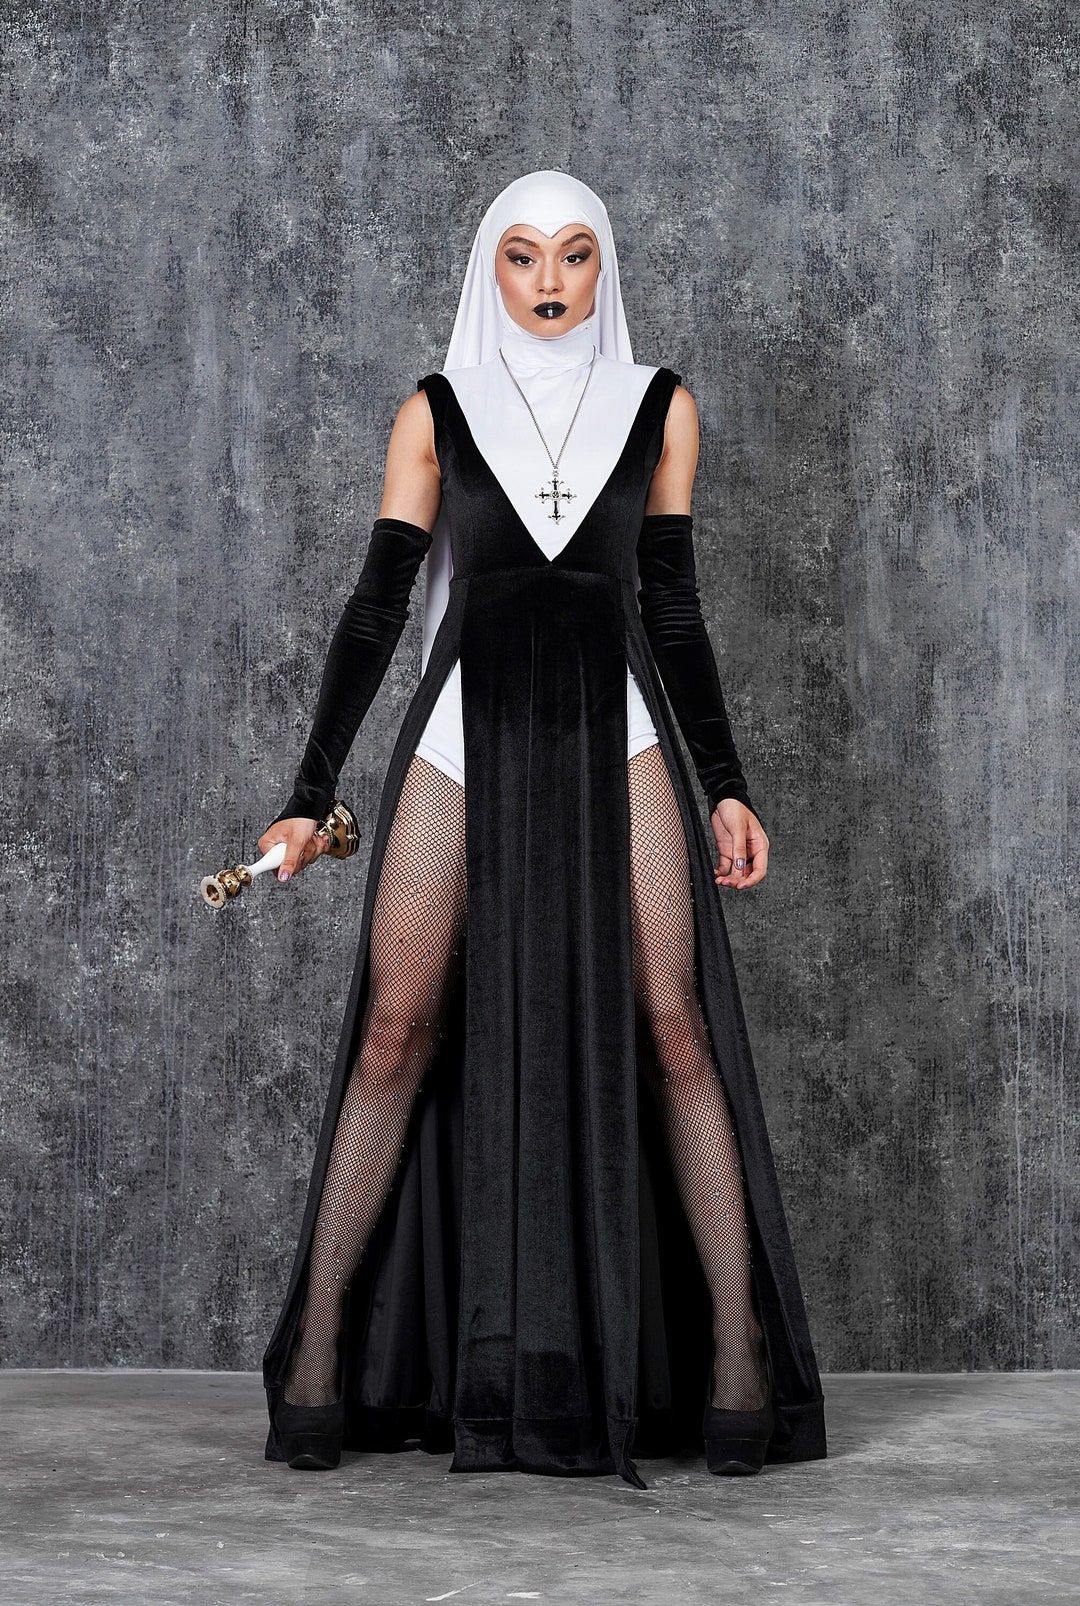 Sexy Nun Dress Nun Costume for Woman Halloween Costume - Etsy UK